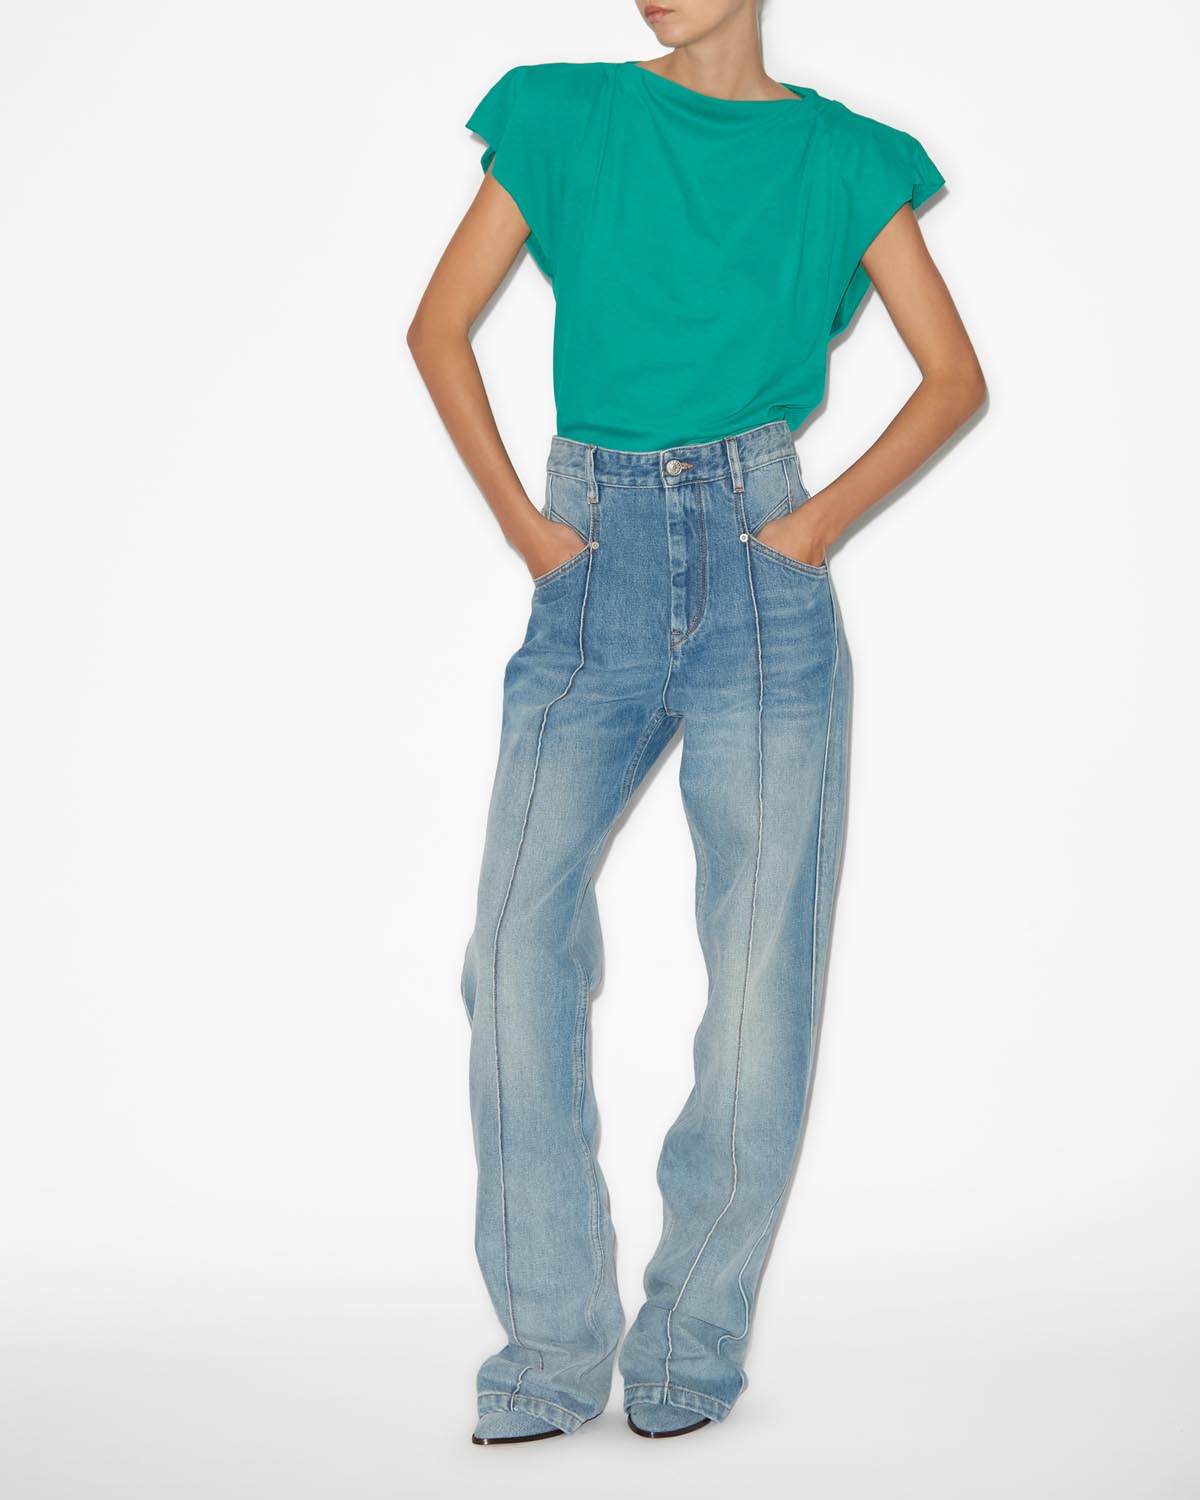 Sebani ティーシャツ Woman Green 10